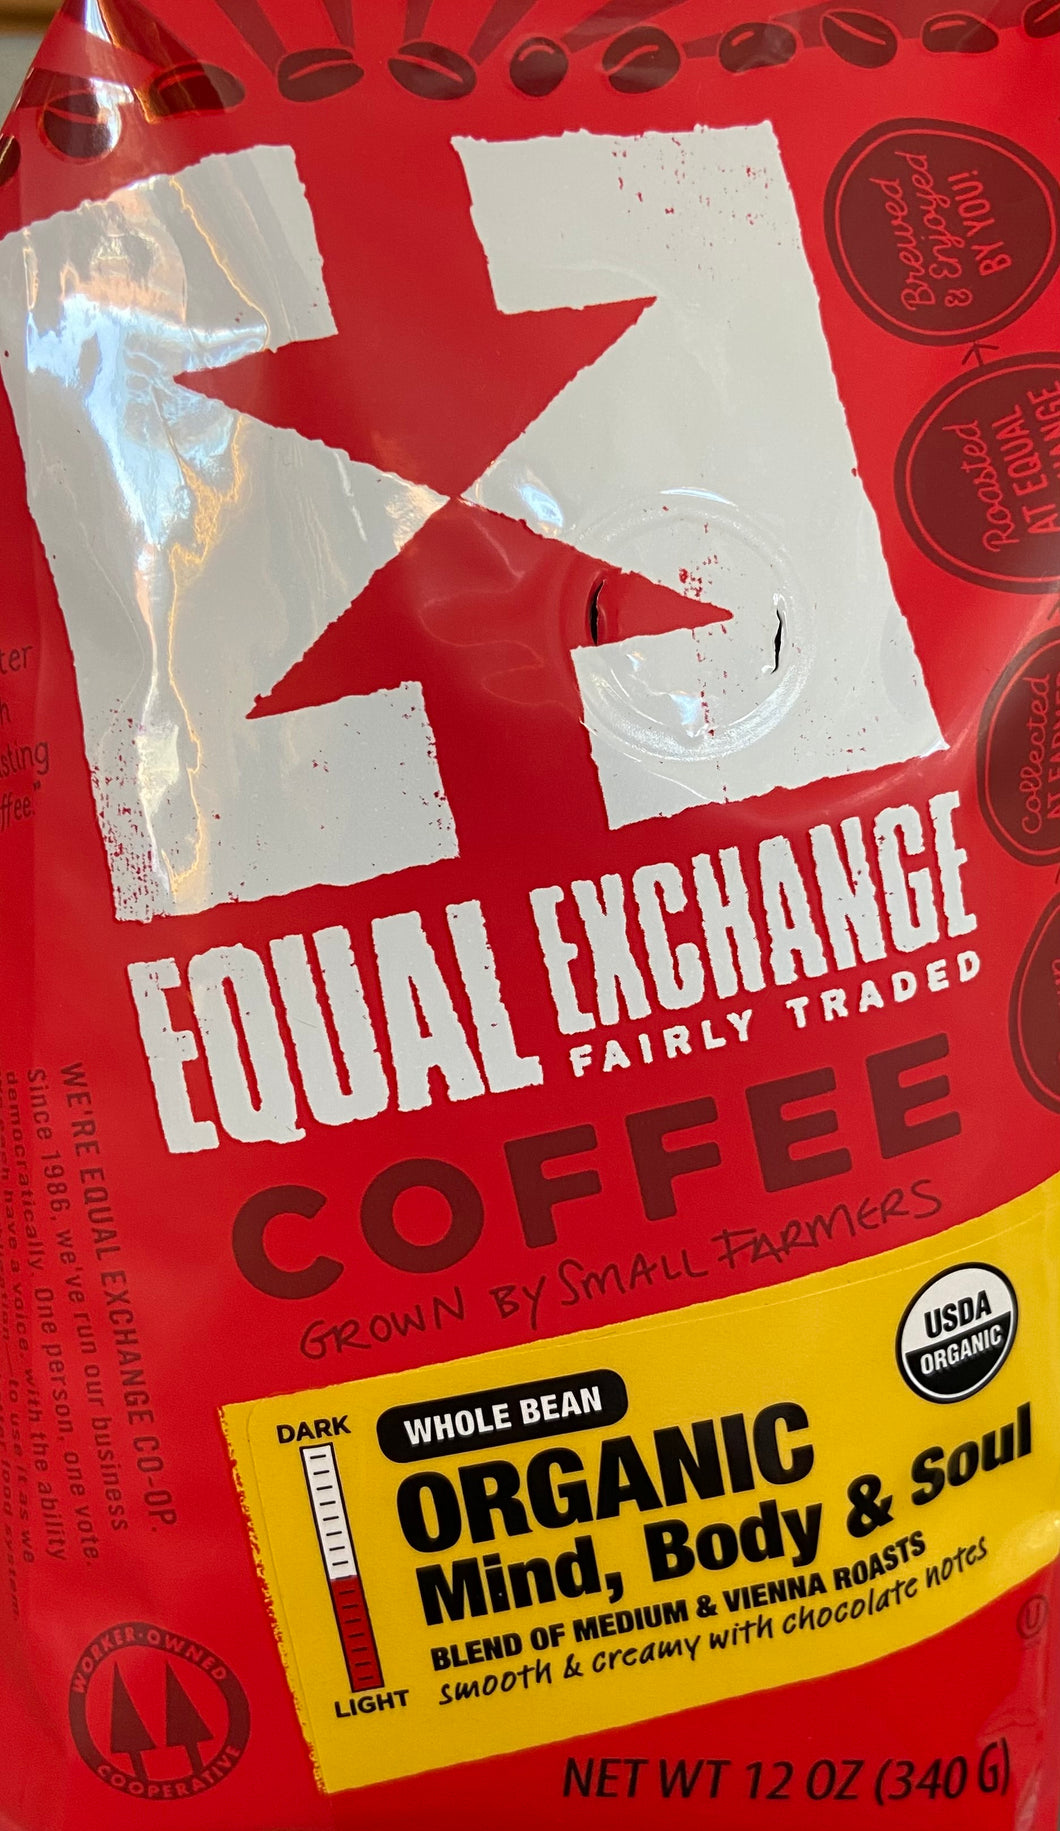 Coffee, Organic Mind, Body & Soul, Whole Bean, Equal Exchange